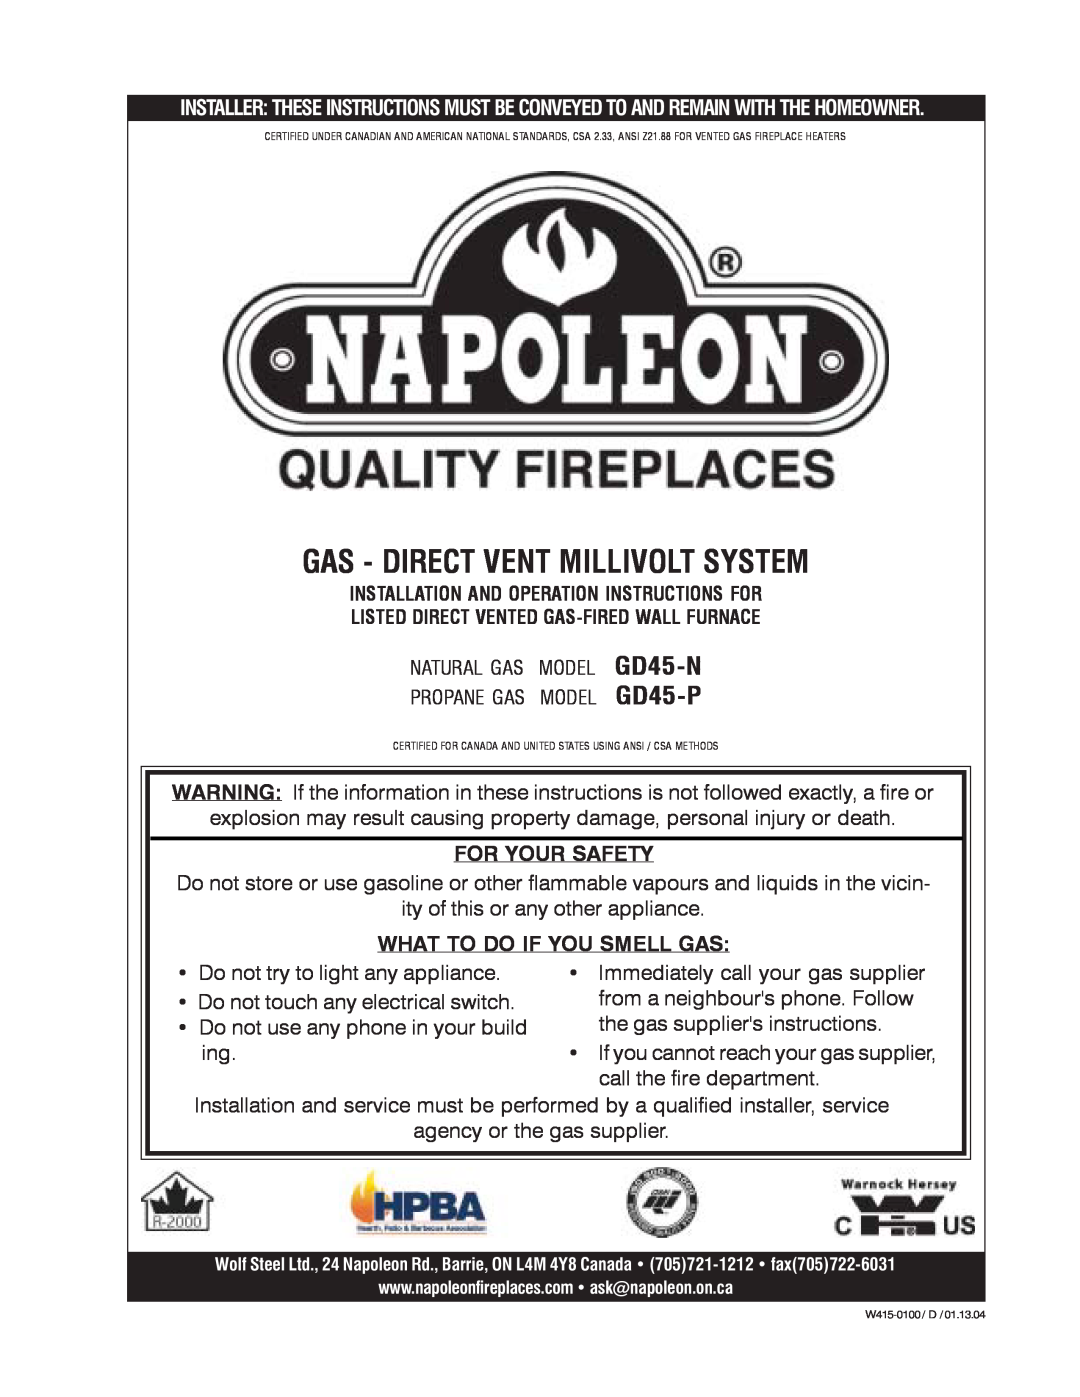 Napoleon Fireplaces manual Gas - Direct Vent Millivolt System, GD45-N GD45-P 